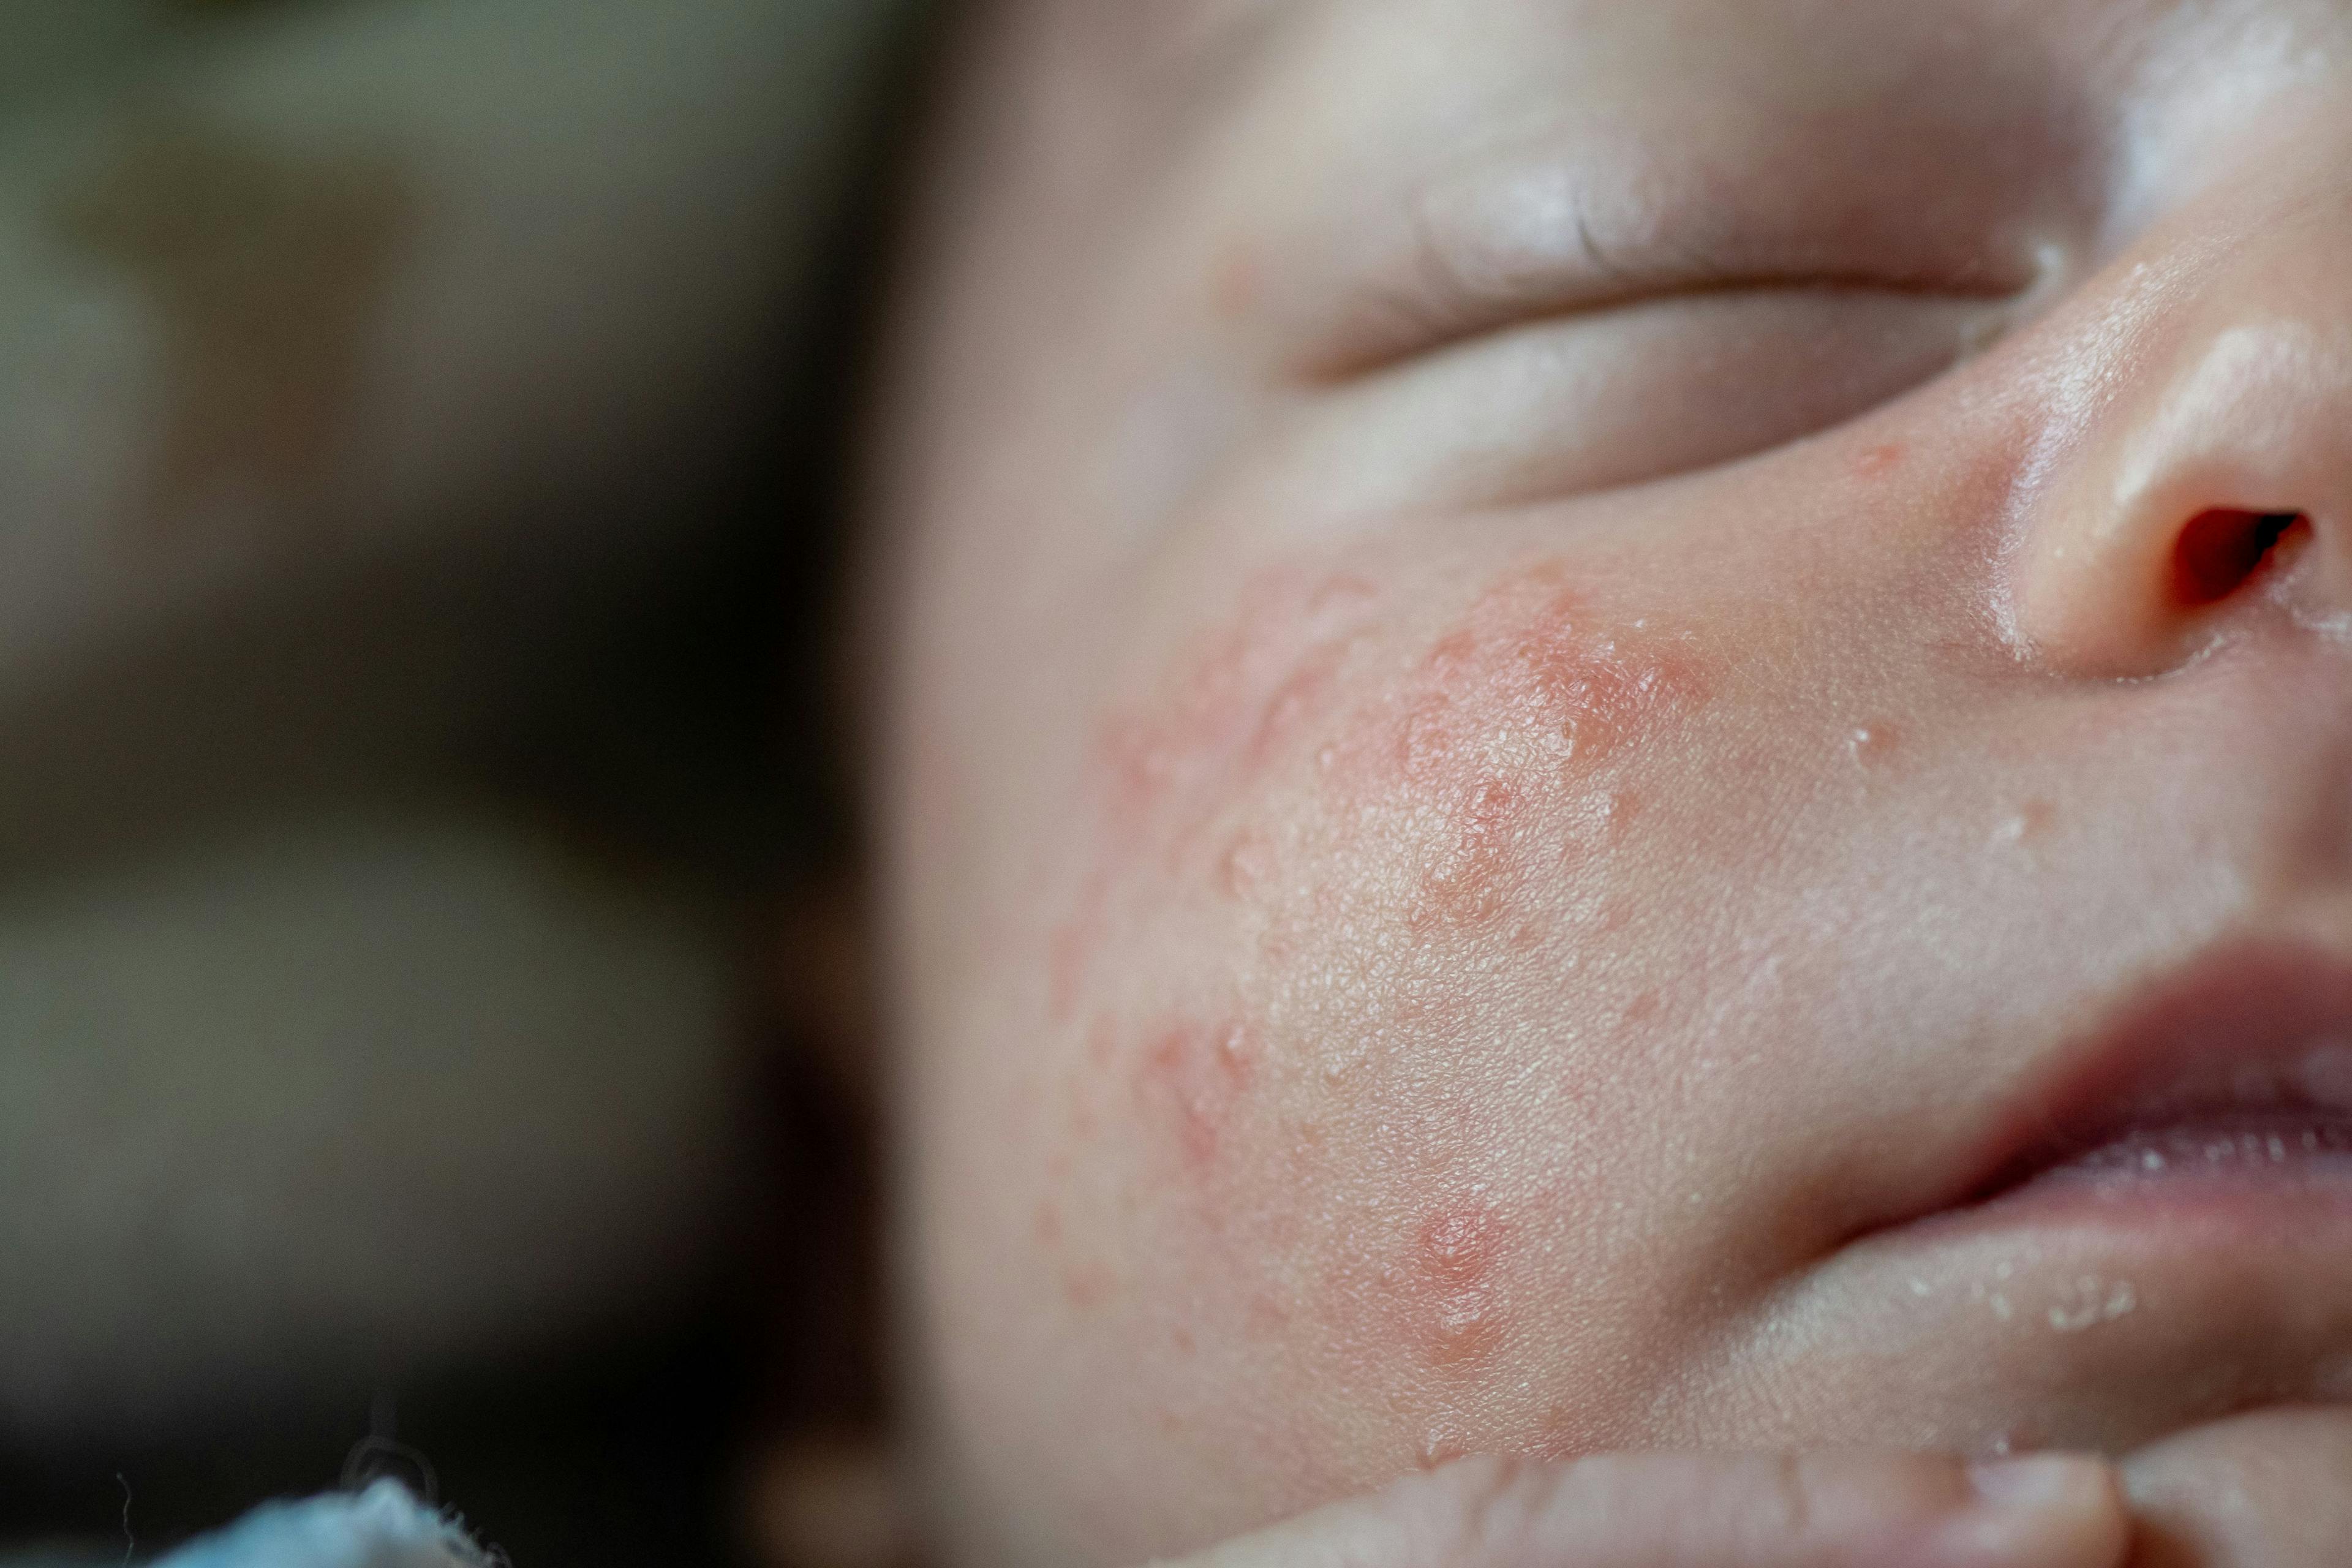 Infant with skin irritation | Image credit: Diego - stock.adobe.com